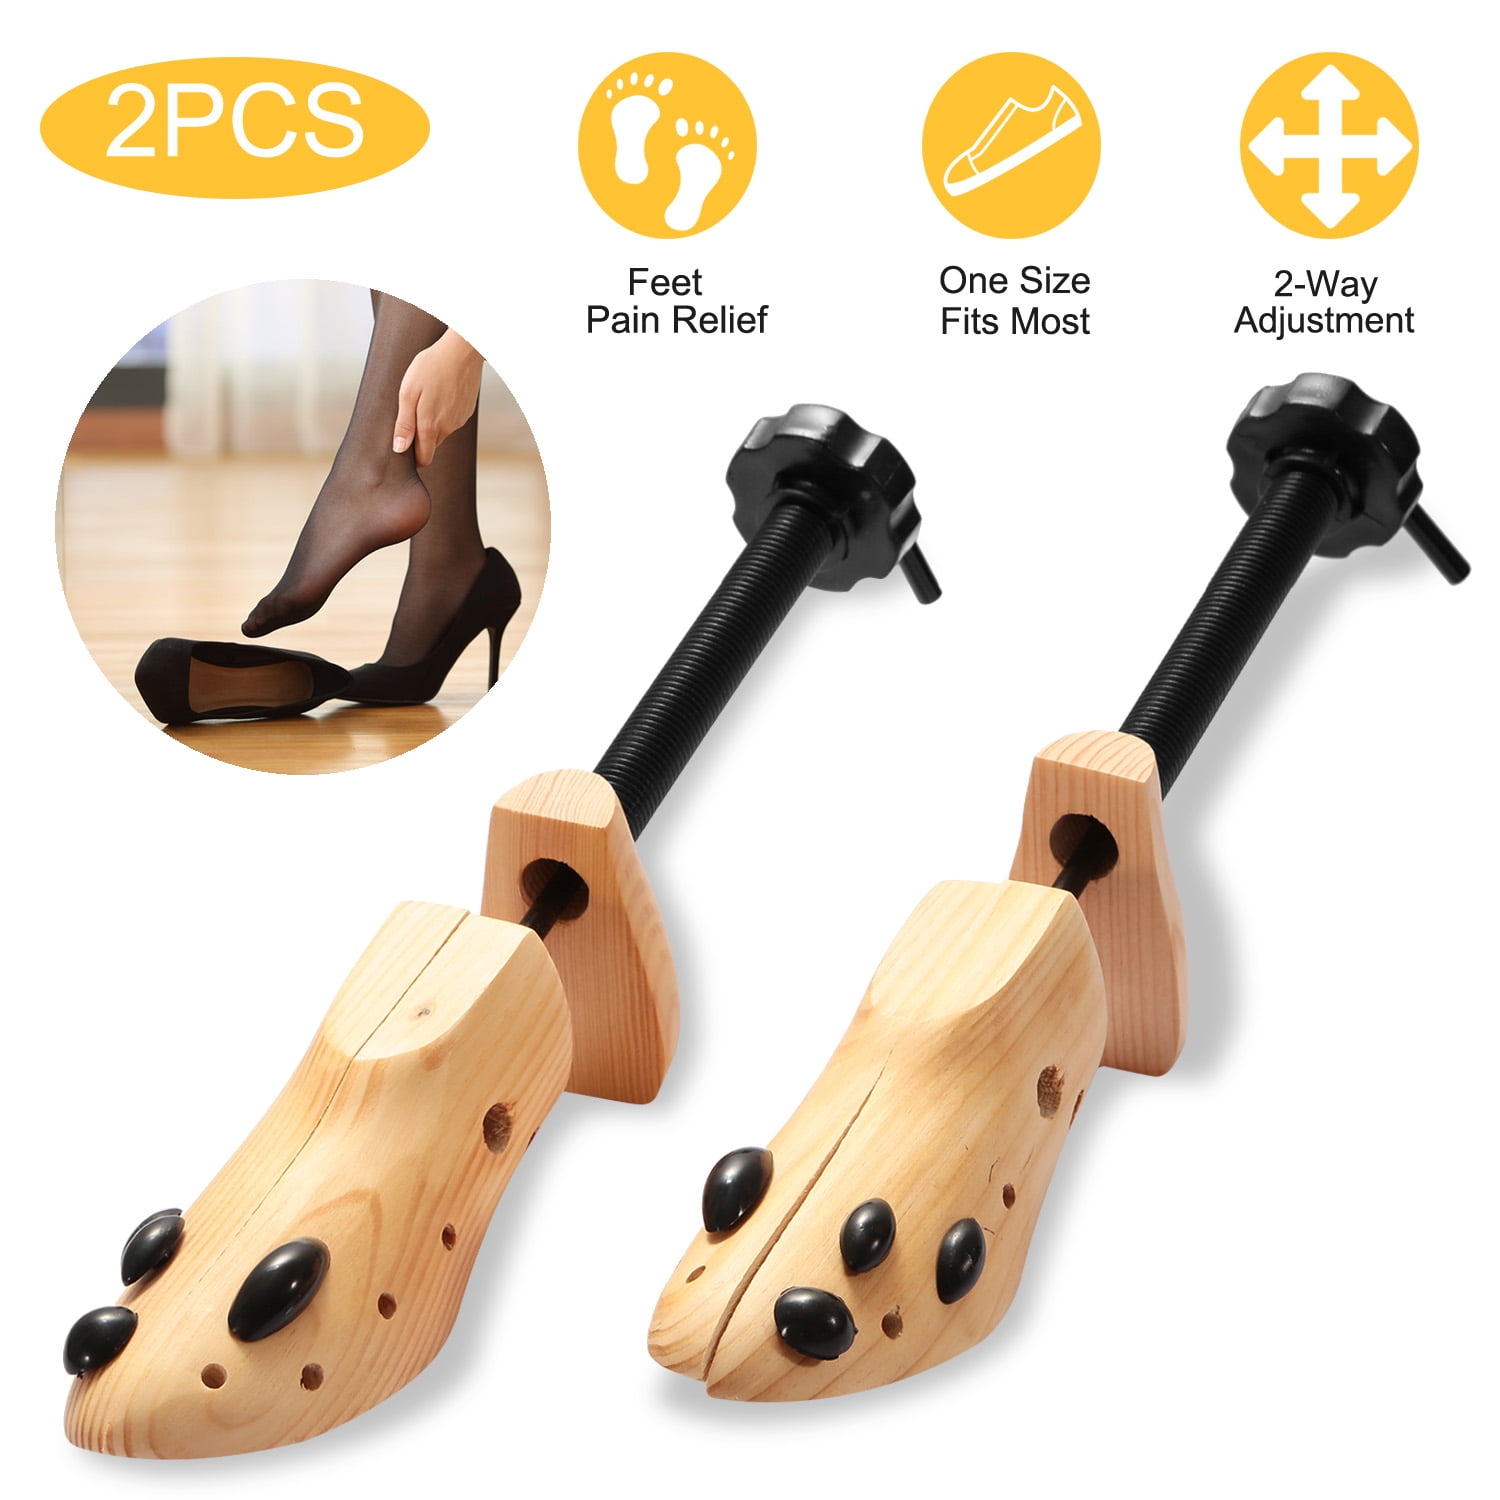 1-2Pcs Ladies Women Wooden Adjustable 2-Way Shoe Stretcher Shaper Tree US 5-10 